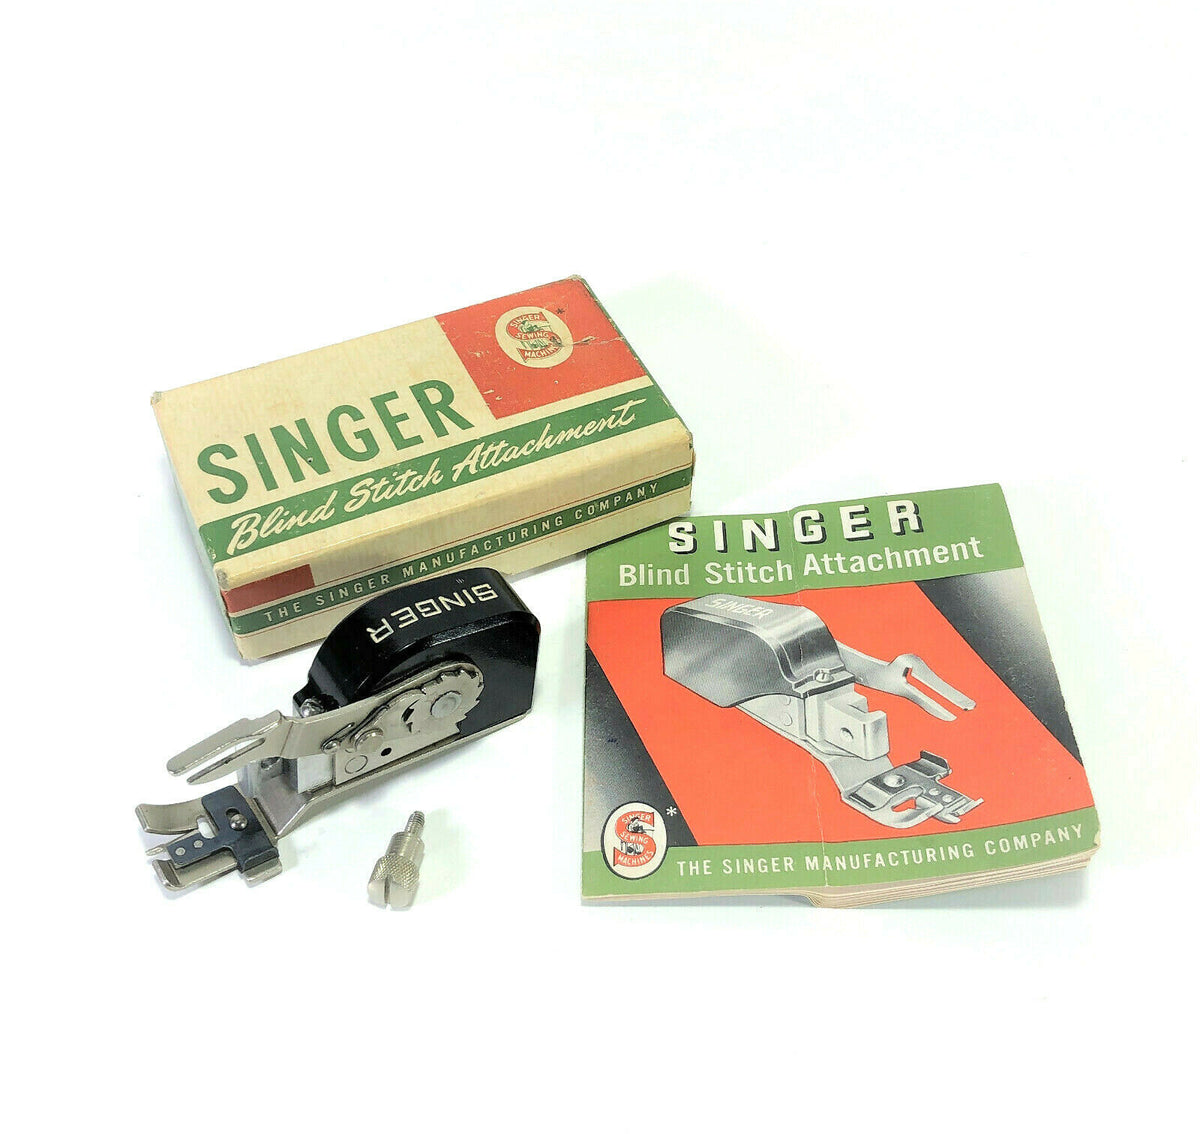 Singer Sewing Machine Low Shank Blind Stitch Attachment in Box